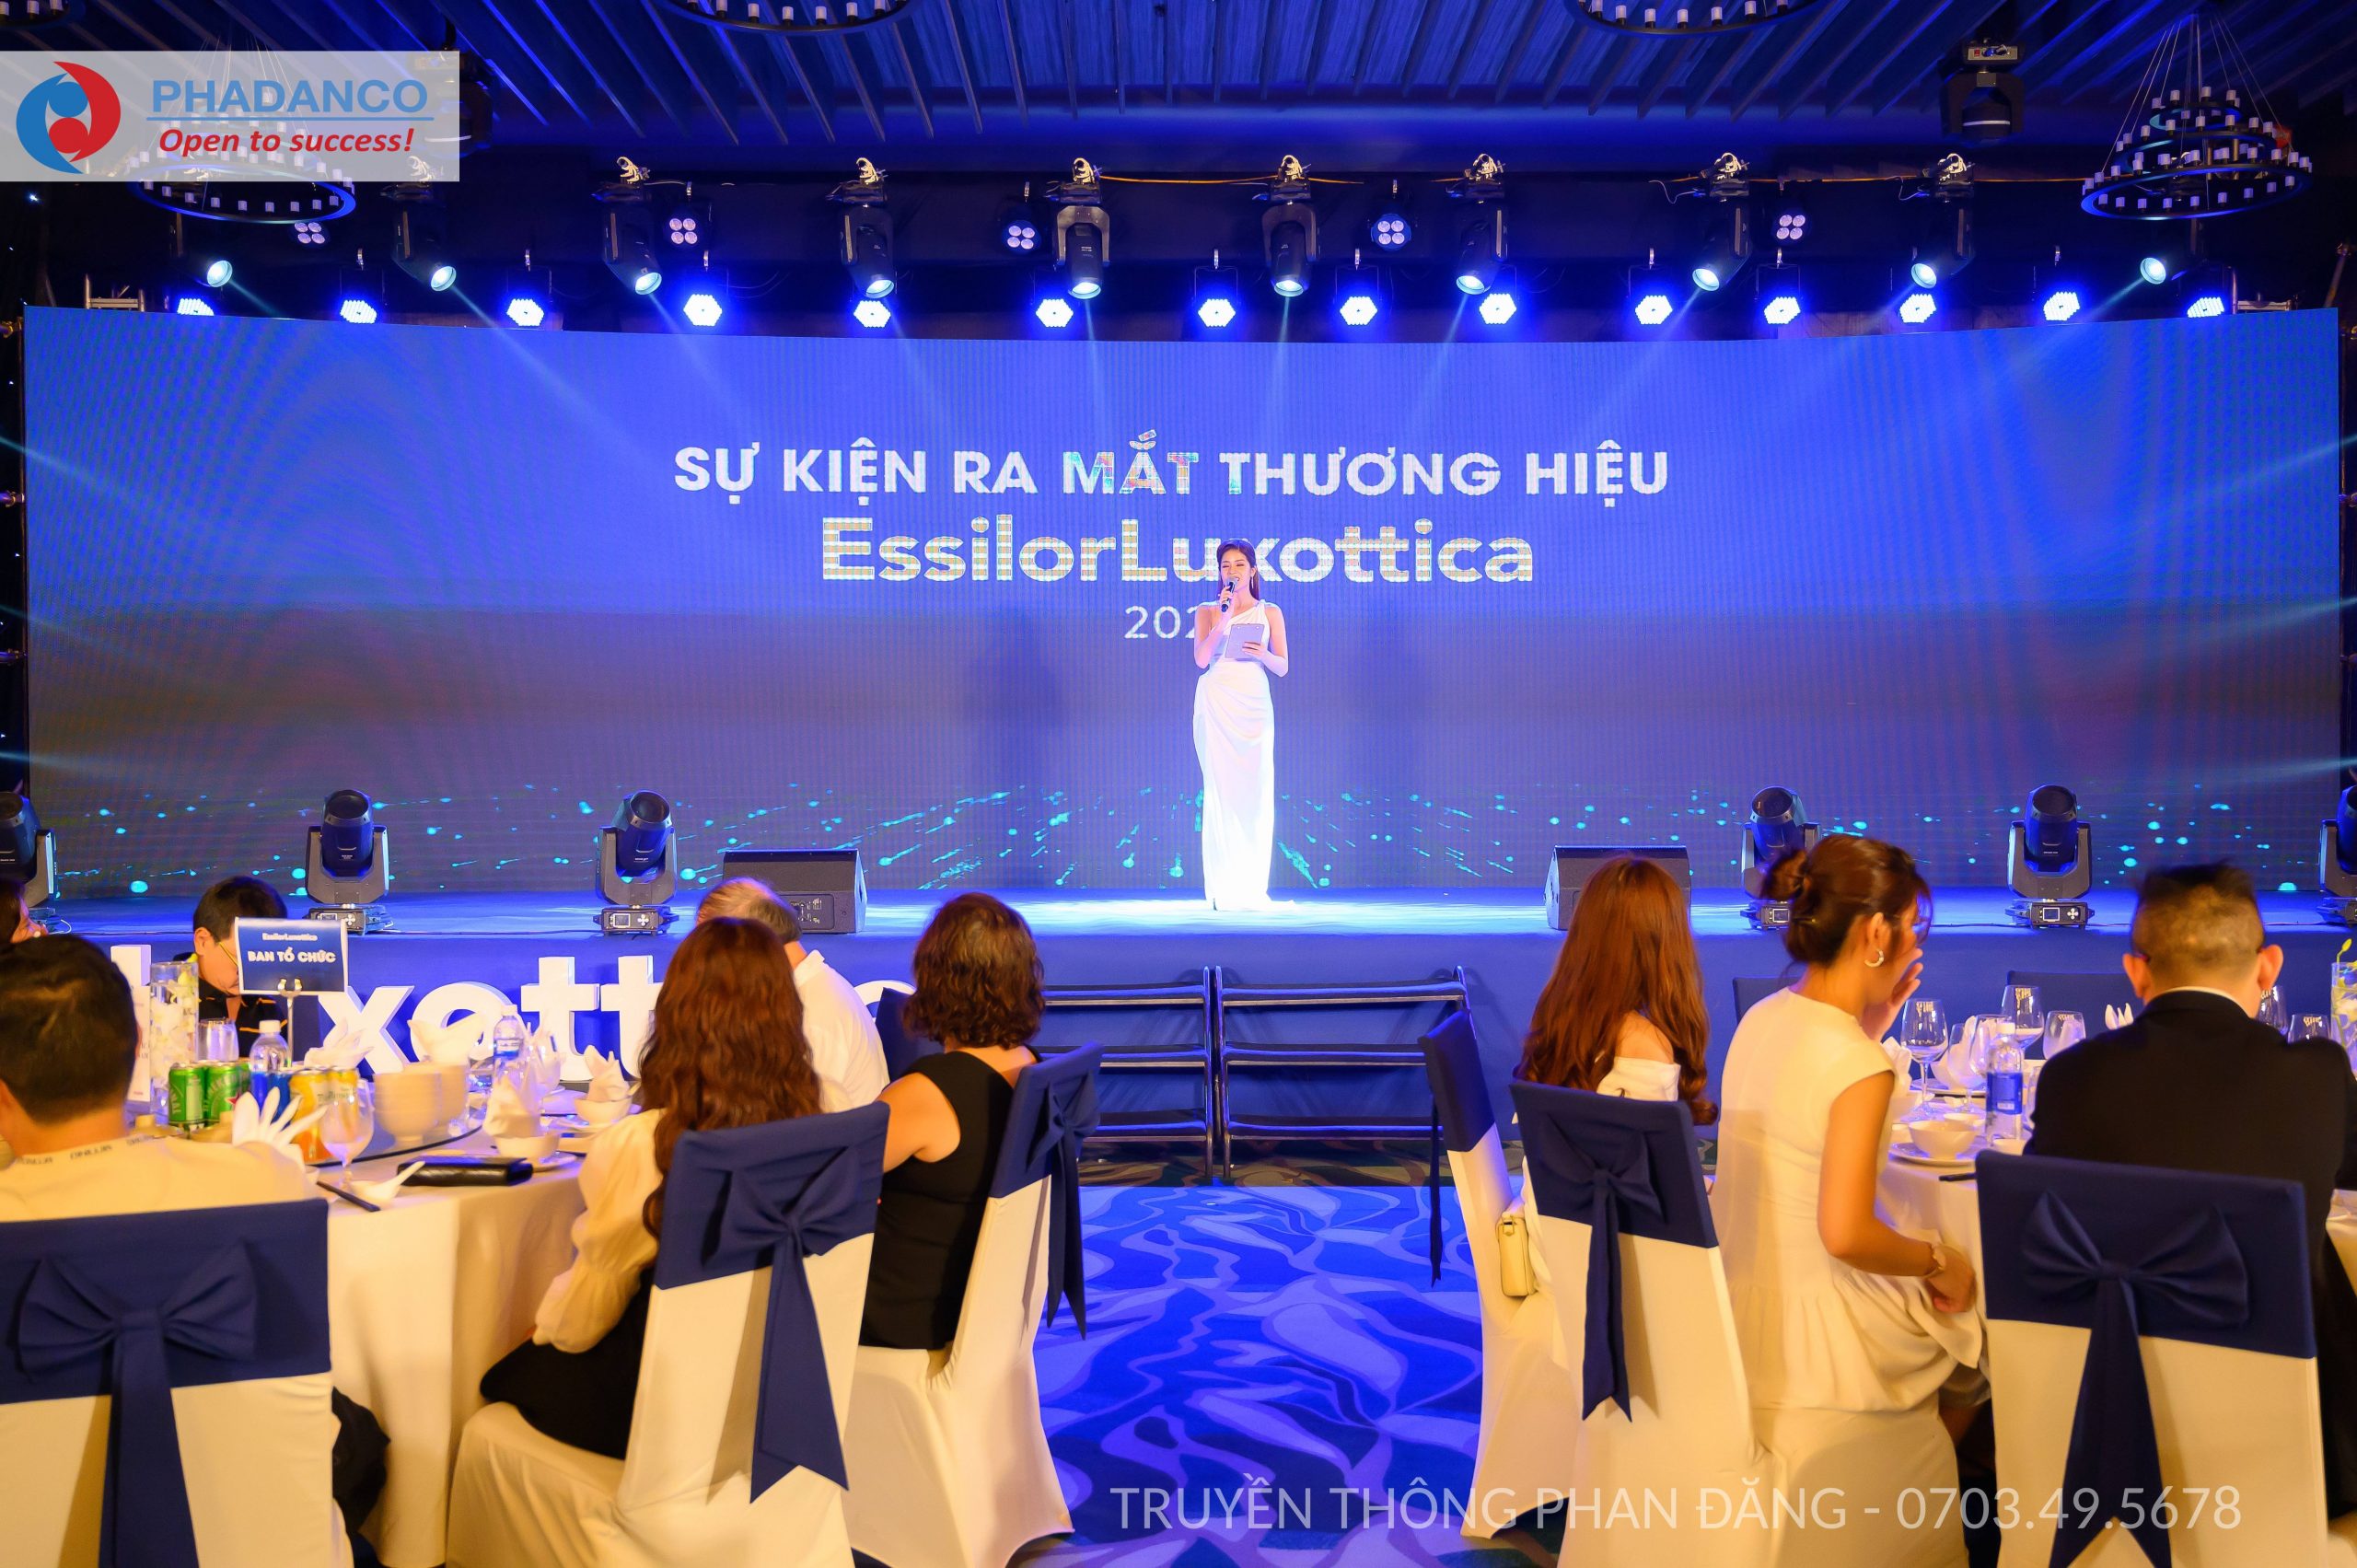 MC dẫn sự kiện ra mắt thương hiệu essilor luxottica